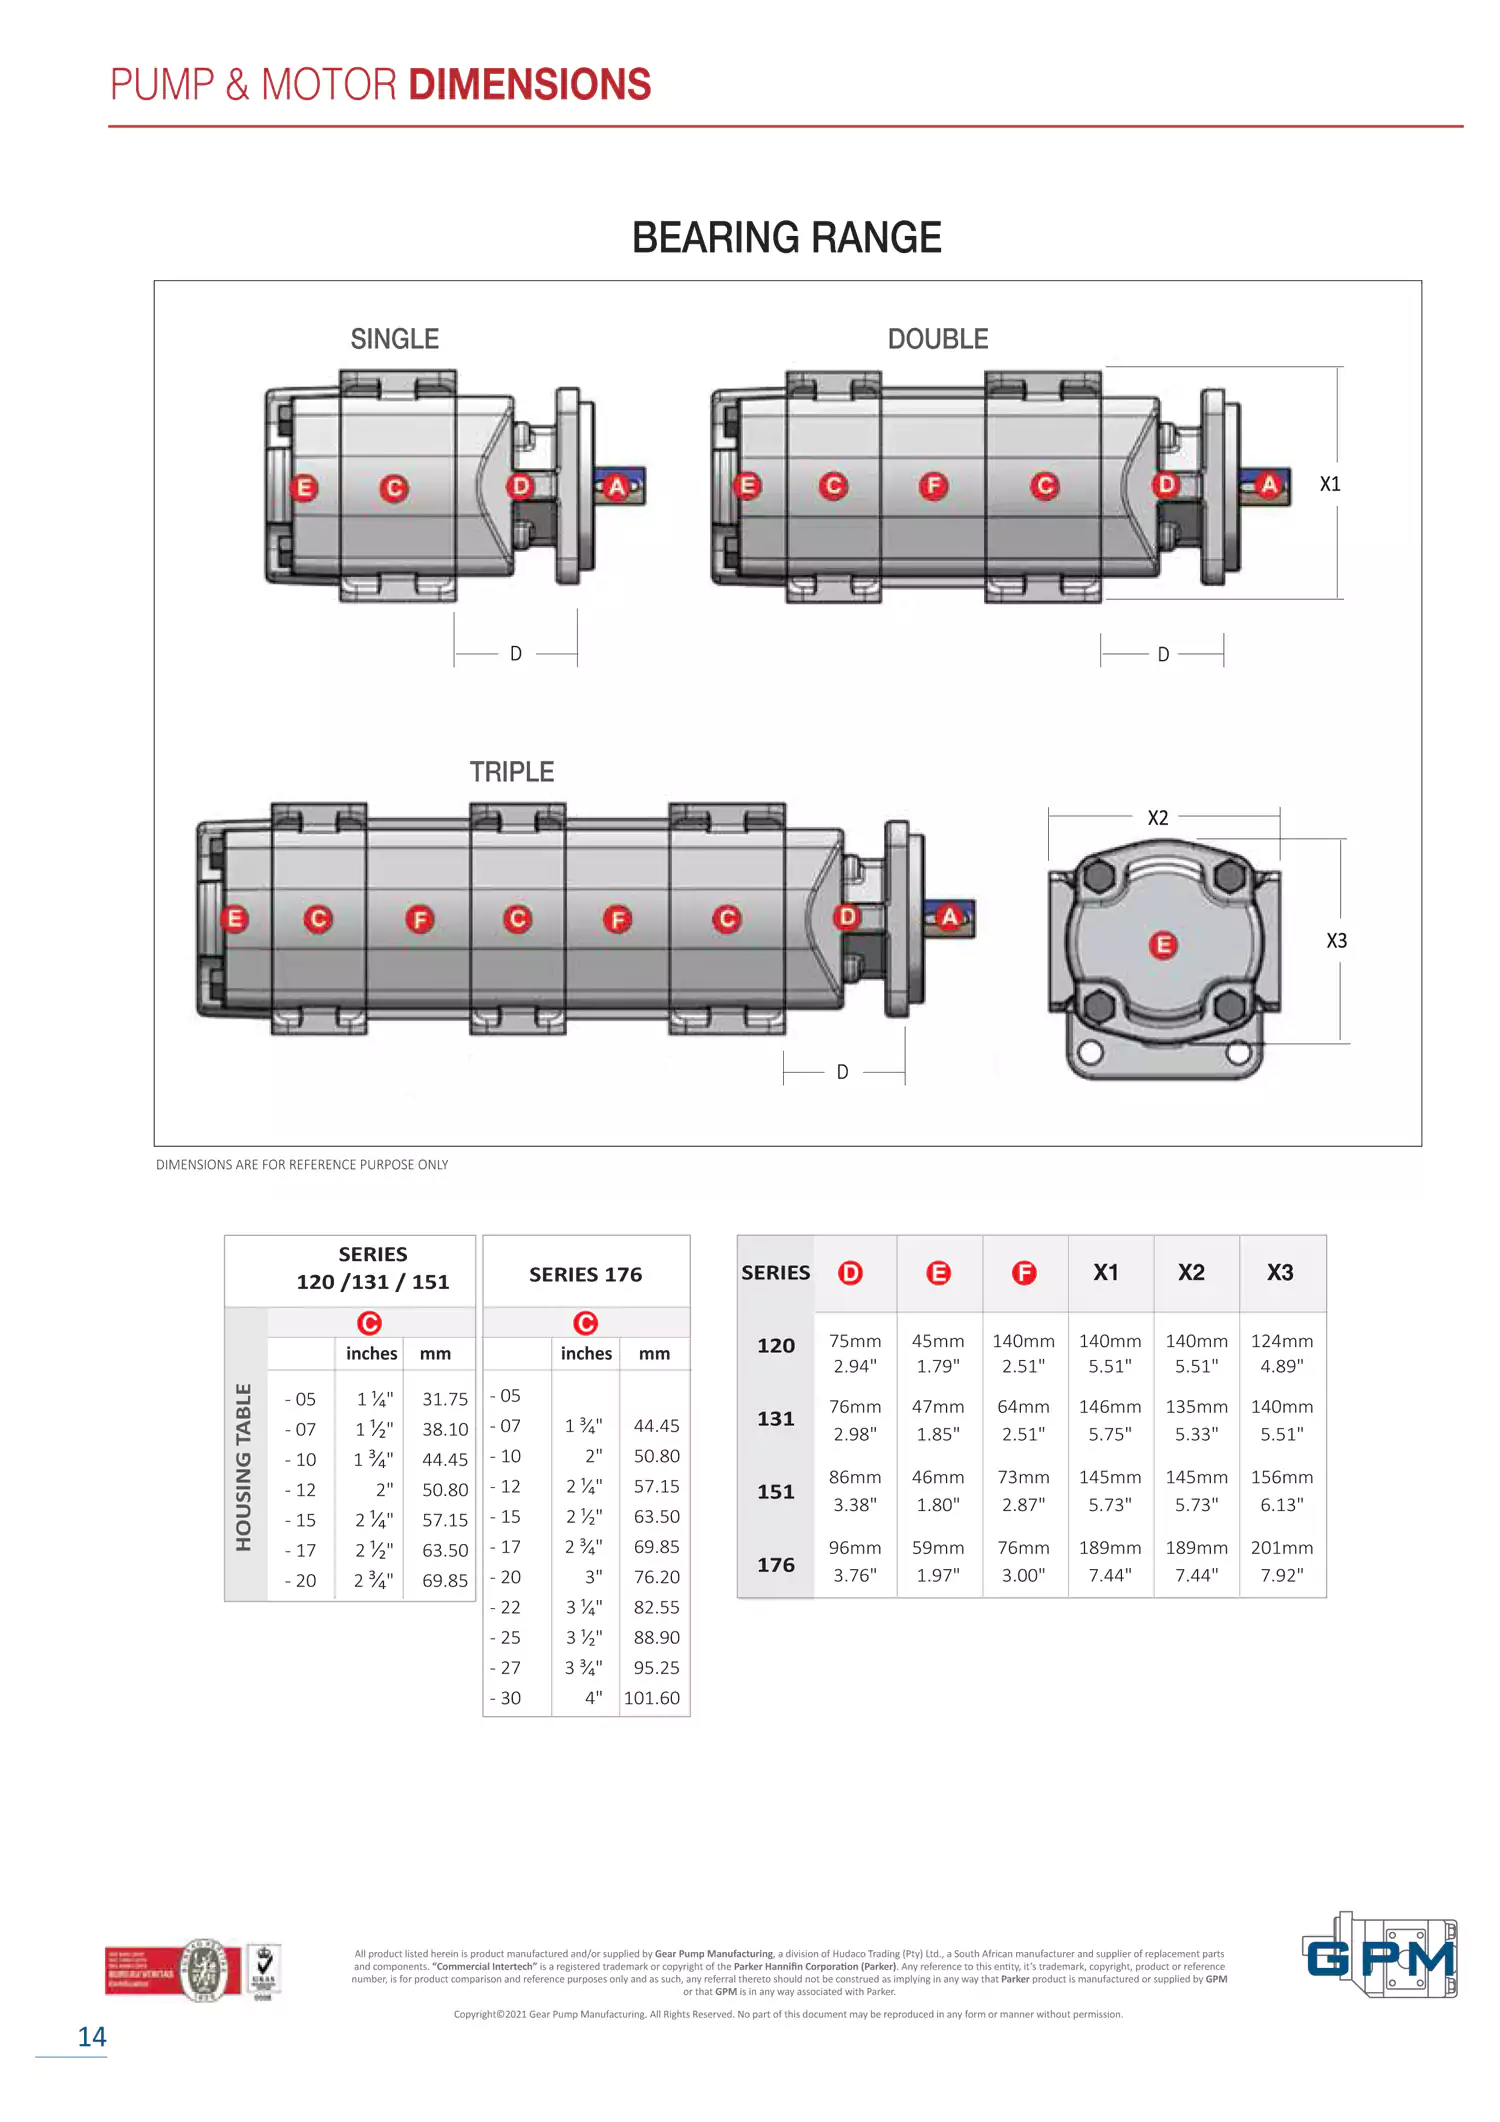 Page-14 - Pump & Motor Dimensions - Bearing Range